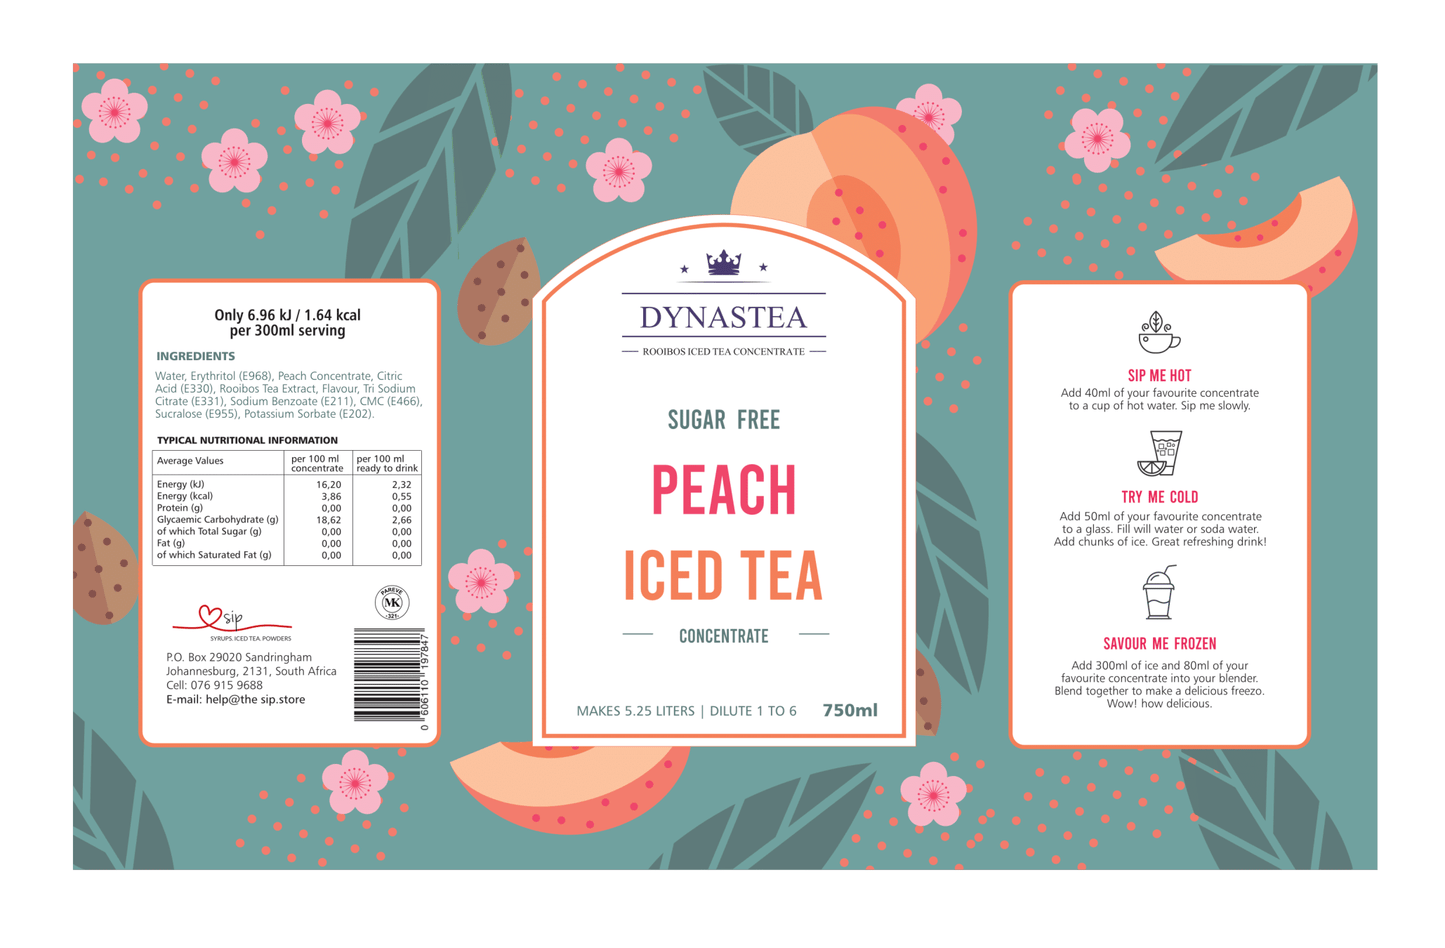 Peach Iced Tea Concentrate